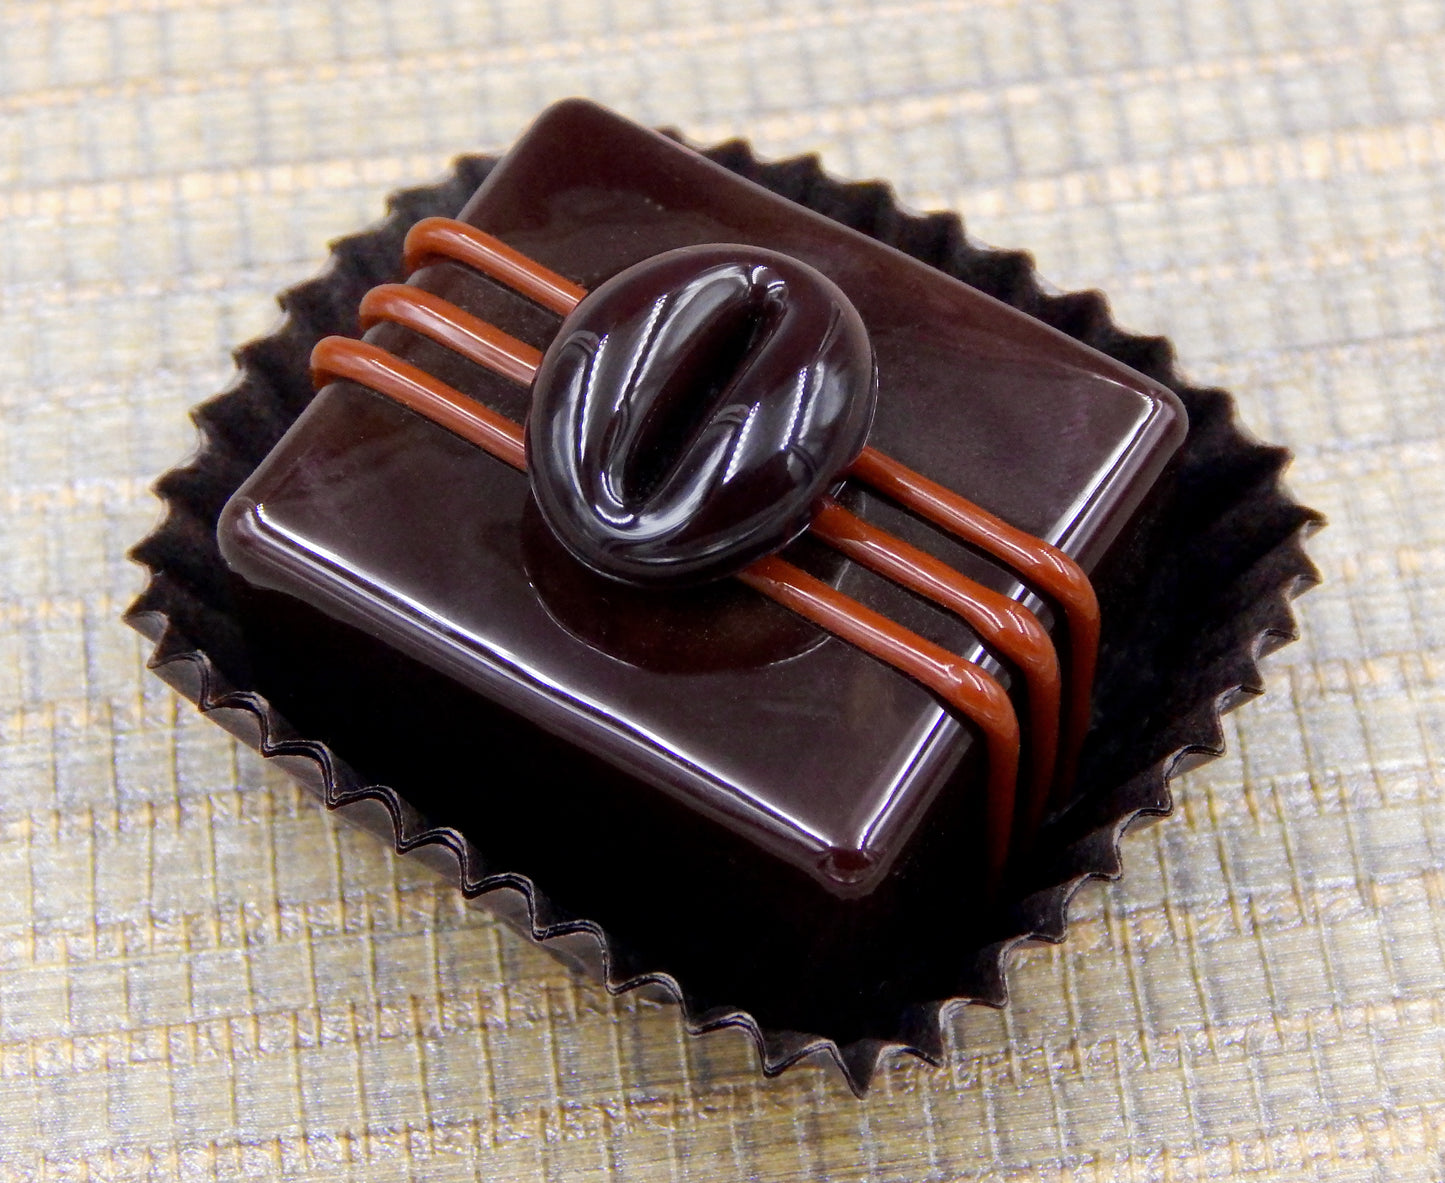 Chocolate Treat with Coffee Bean (12-028+)